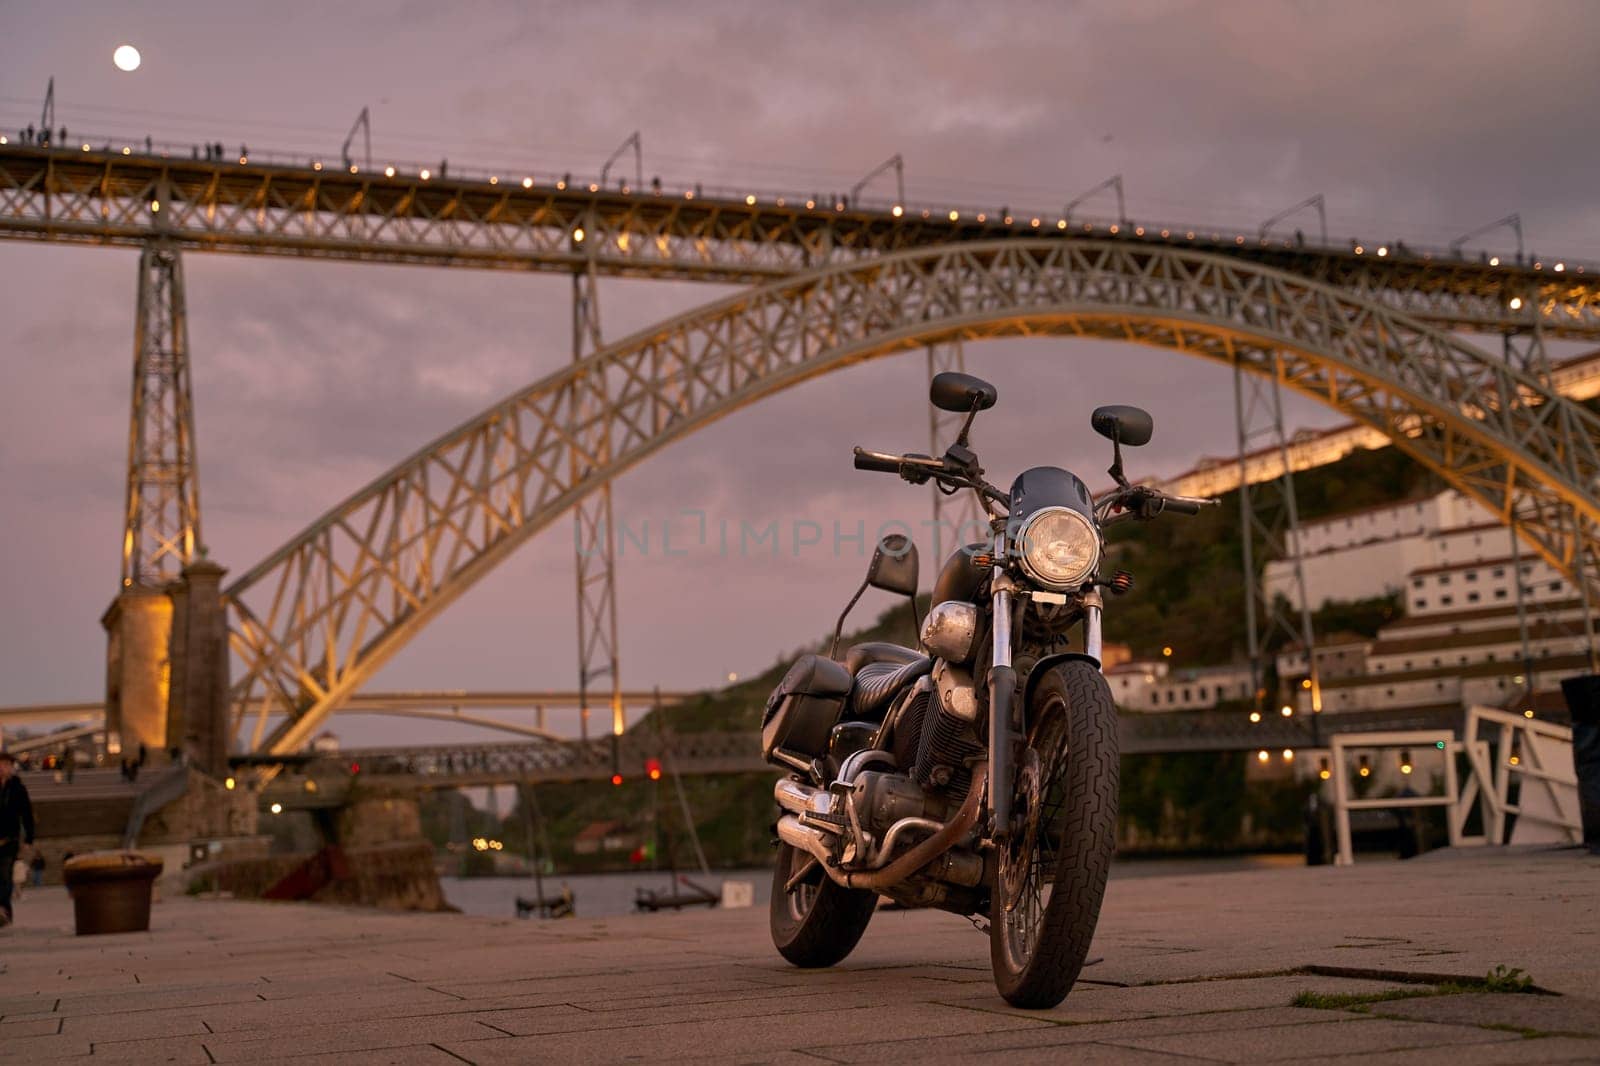 Old bike on background of the Dom Luis I Bridge in Porto, Portugal